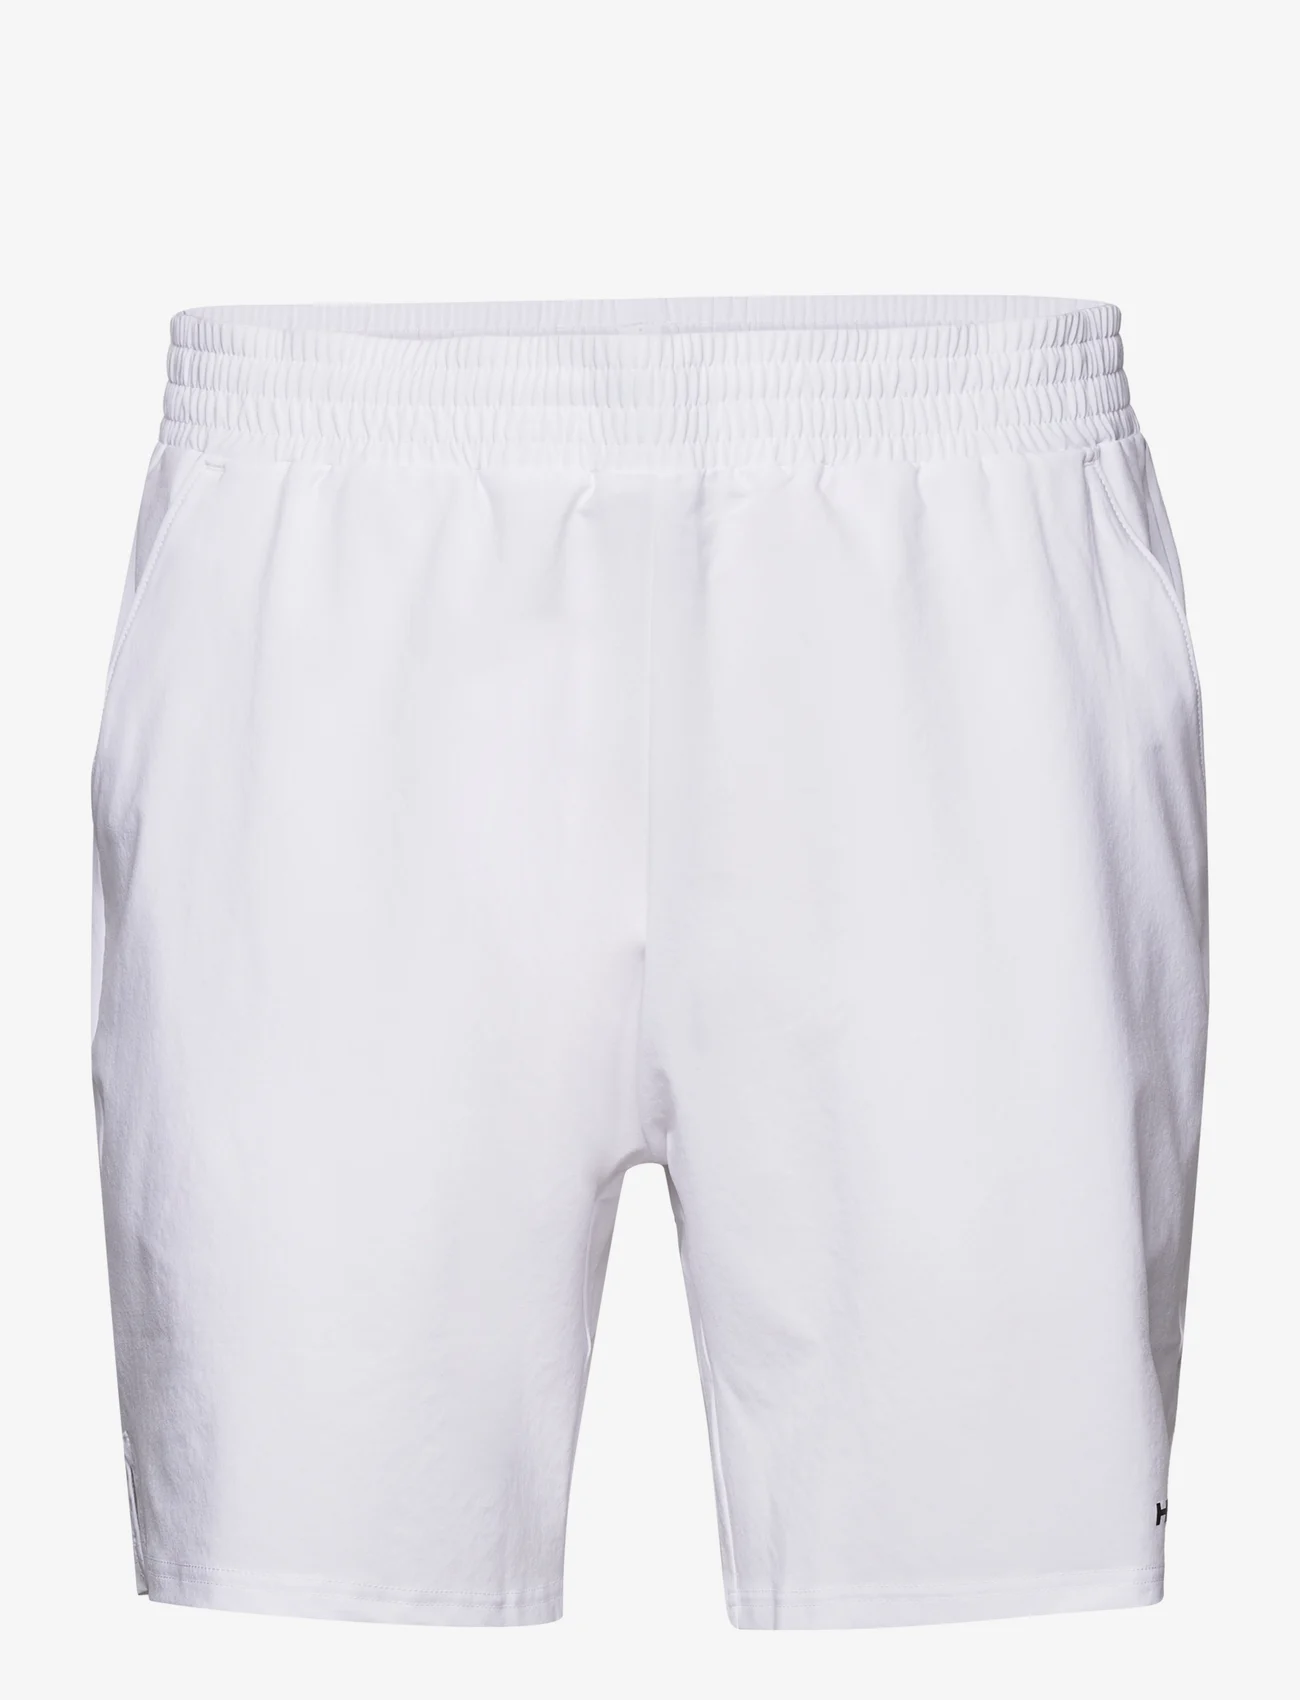 Head - POWER Shorts Men - training shorts - white - 0